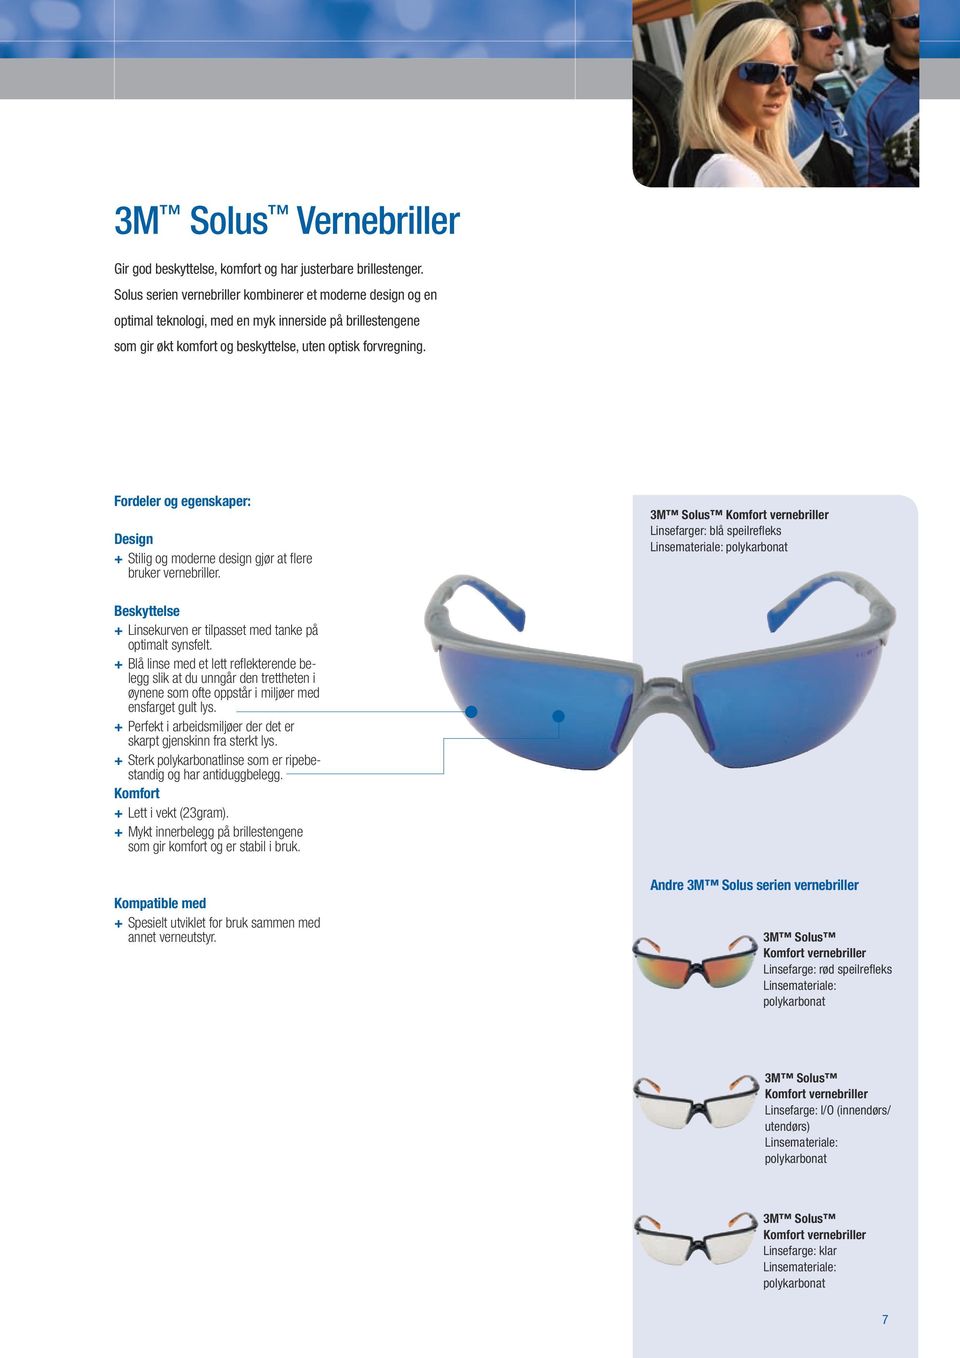 + Stilig og moderne design gjør at flere bruker vernebriller. 3M Solus vernebriller Linsefarger: blå speilrefleks + Linsekurven er tilpasset med tanke på optimalt synsfelt.